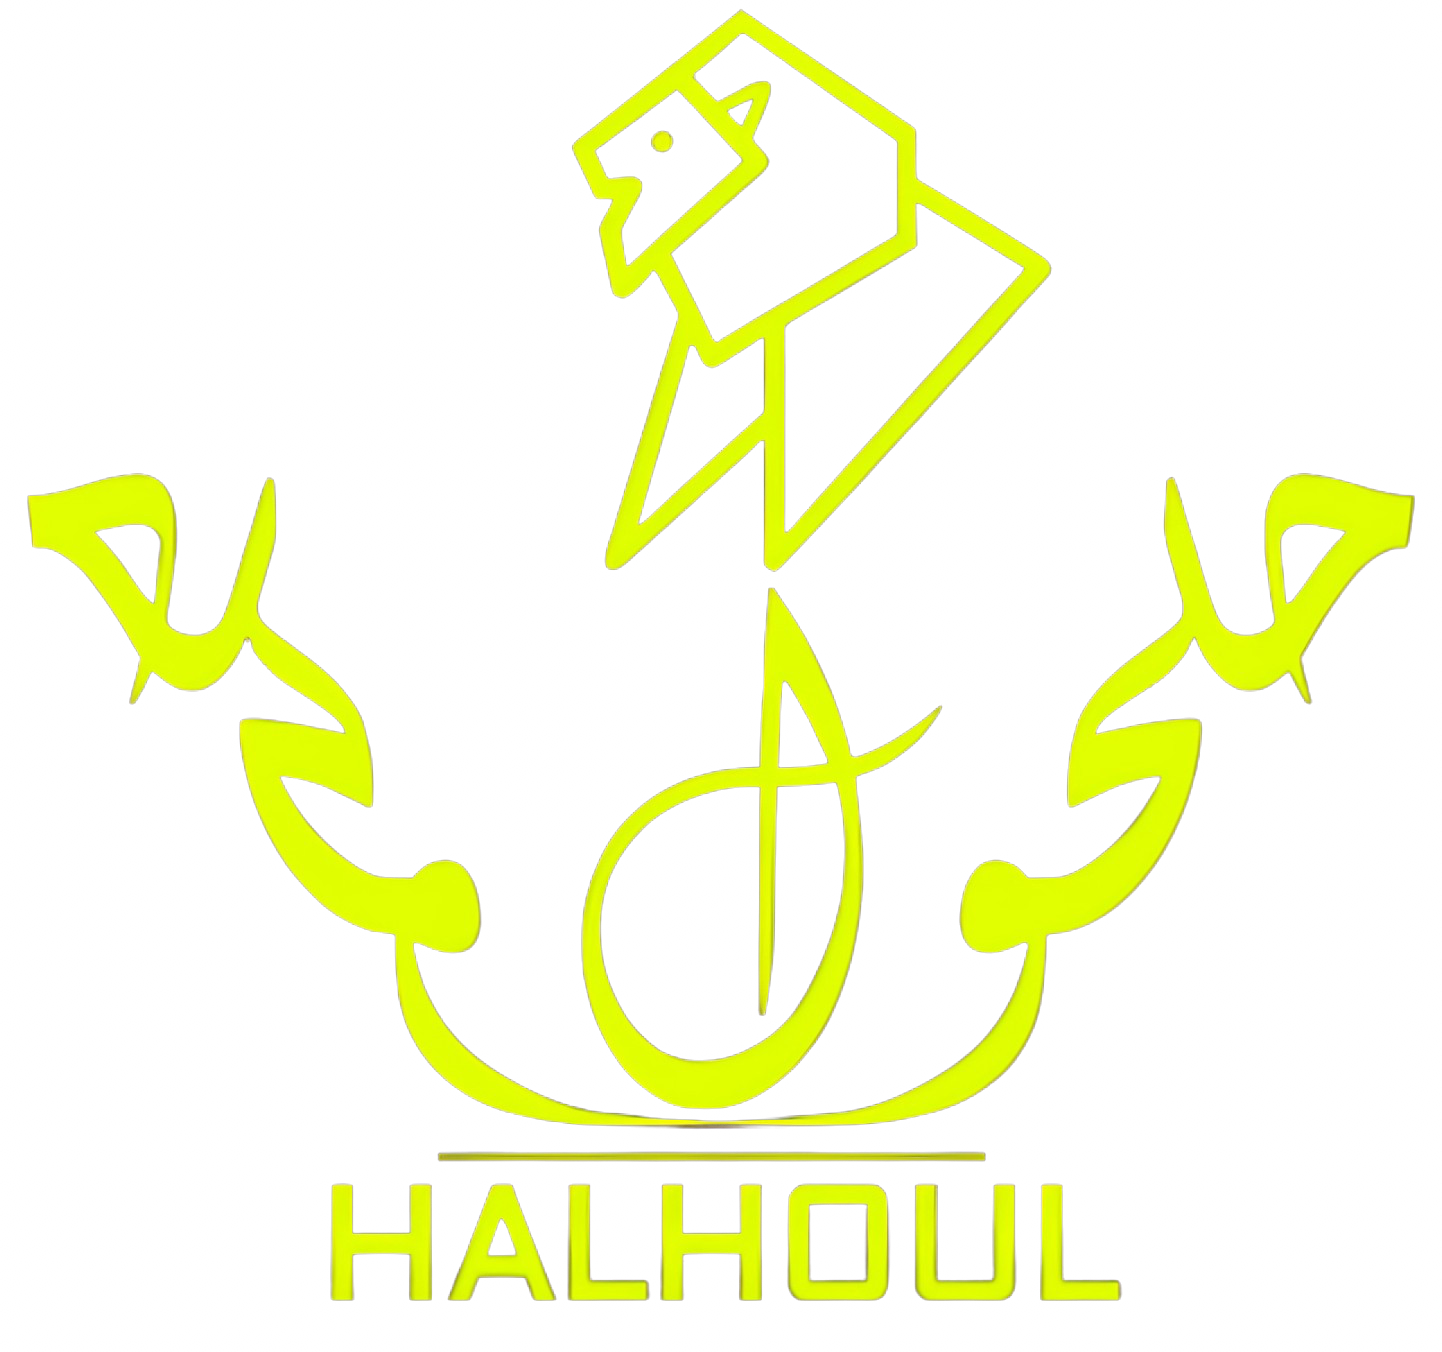 Halhoul